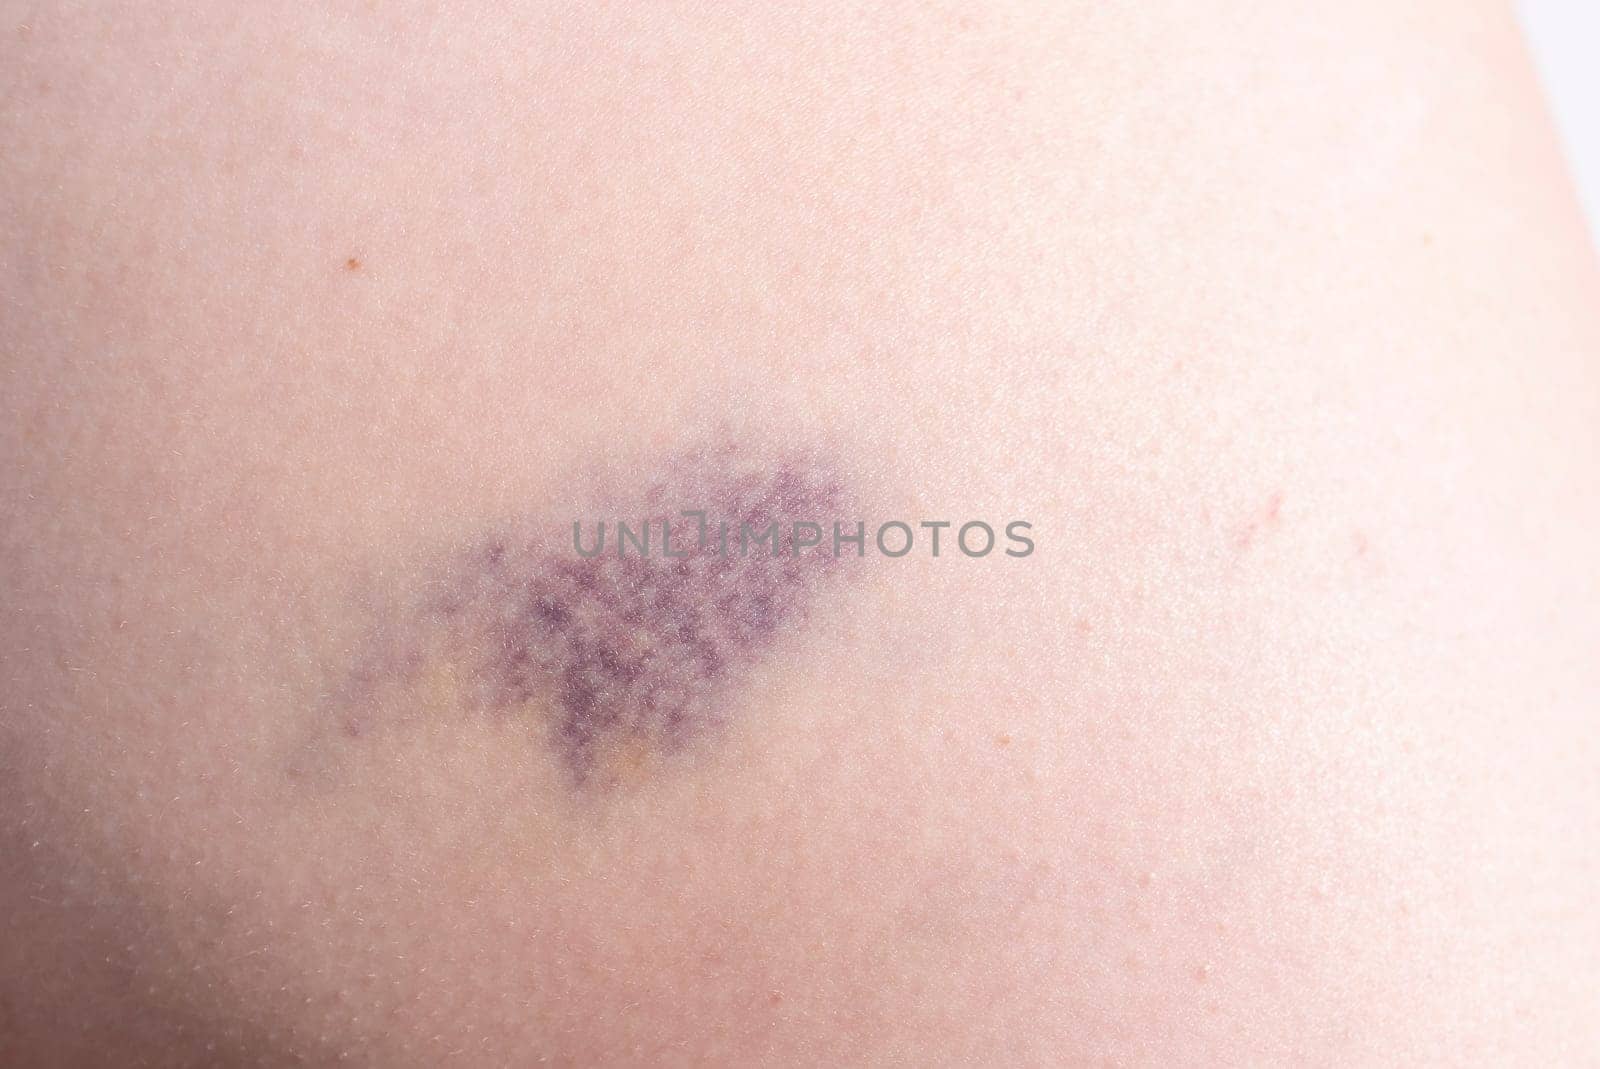 Closeup Blue Purple Hematoma, Bruise On Thigh, Hip After Trauma, Fall. Horizontal plane. Clotted Blood, Injury On Human Body Concept. High quality photo